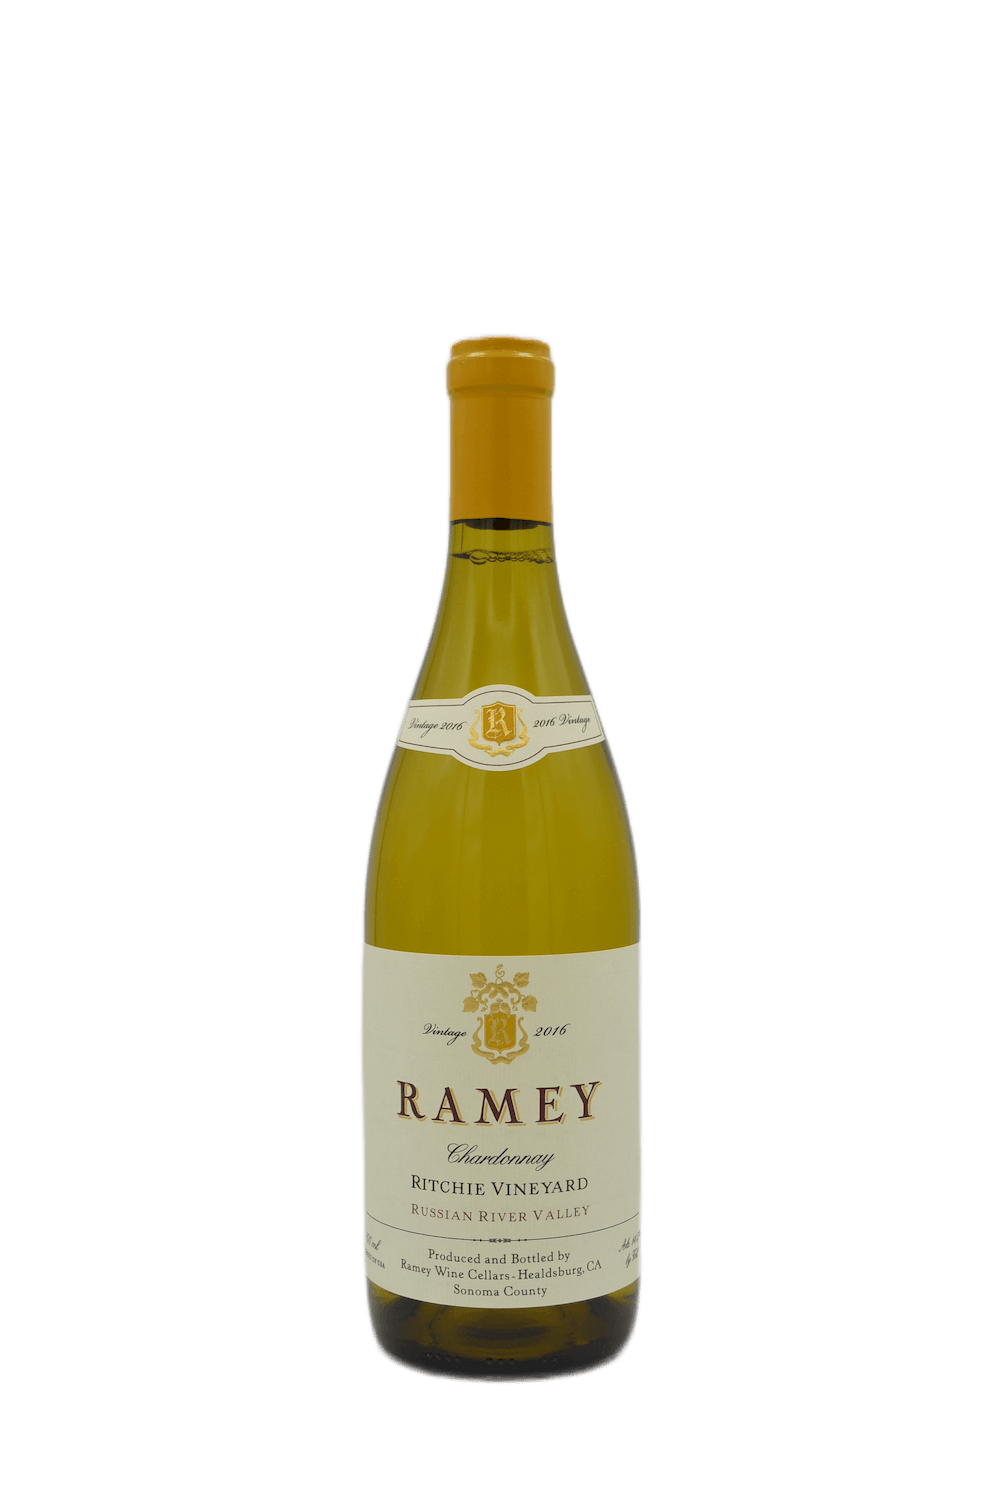 Ramey Chardonnay Ritchie Vineyard 2016